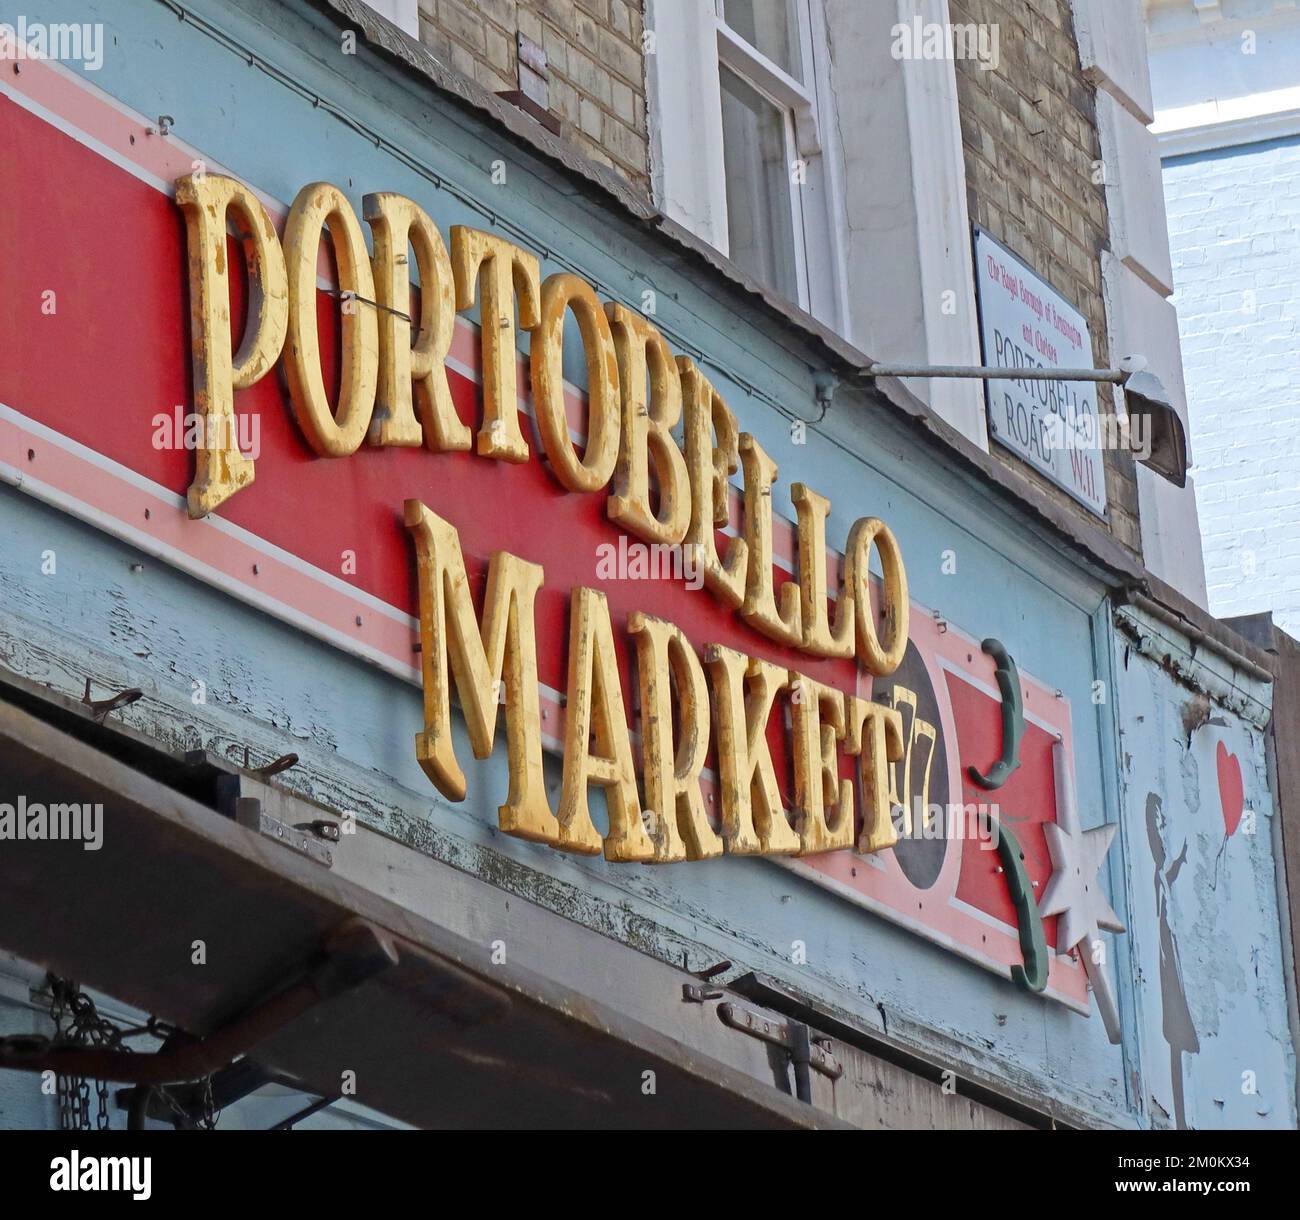 Portobello Market, 177 Portobello Road, Notting Hill, Londres, Royaume-Uni, W11 2DY Banque D'Images